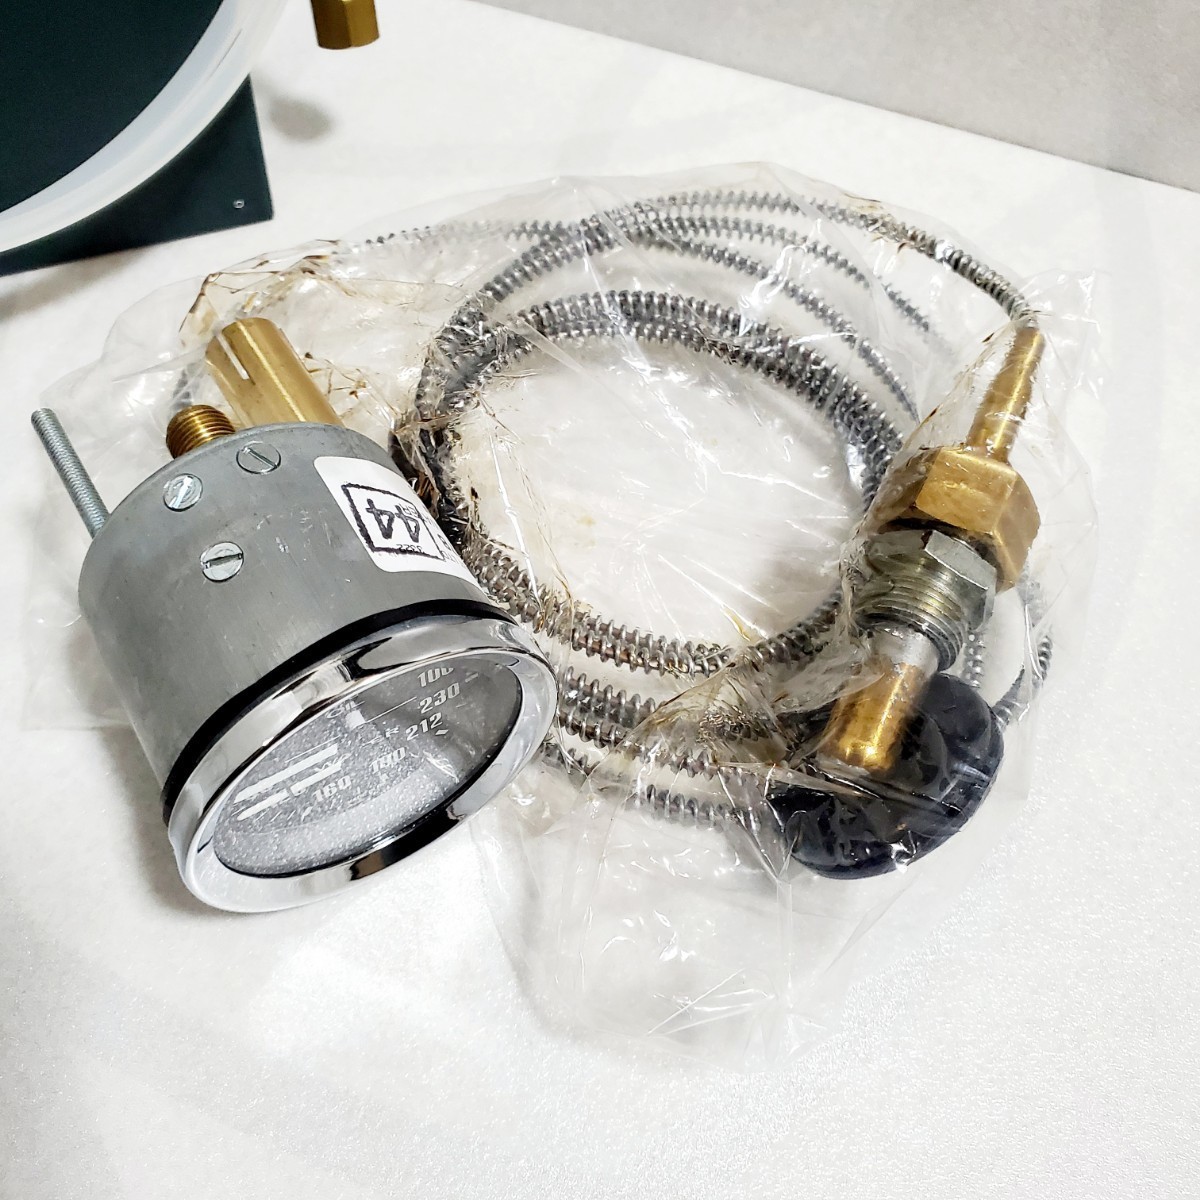 SMITHS スミス デュアルゲージ 水温計 油圧計 GD1301 / SIB130 ナイロン パイプ 付き。ローバーミニ、英国車、クラシック車等用 新品_画像3